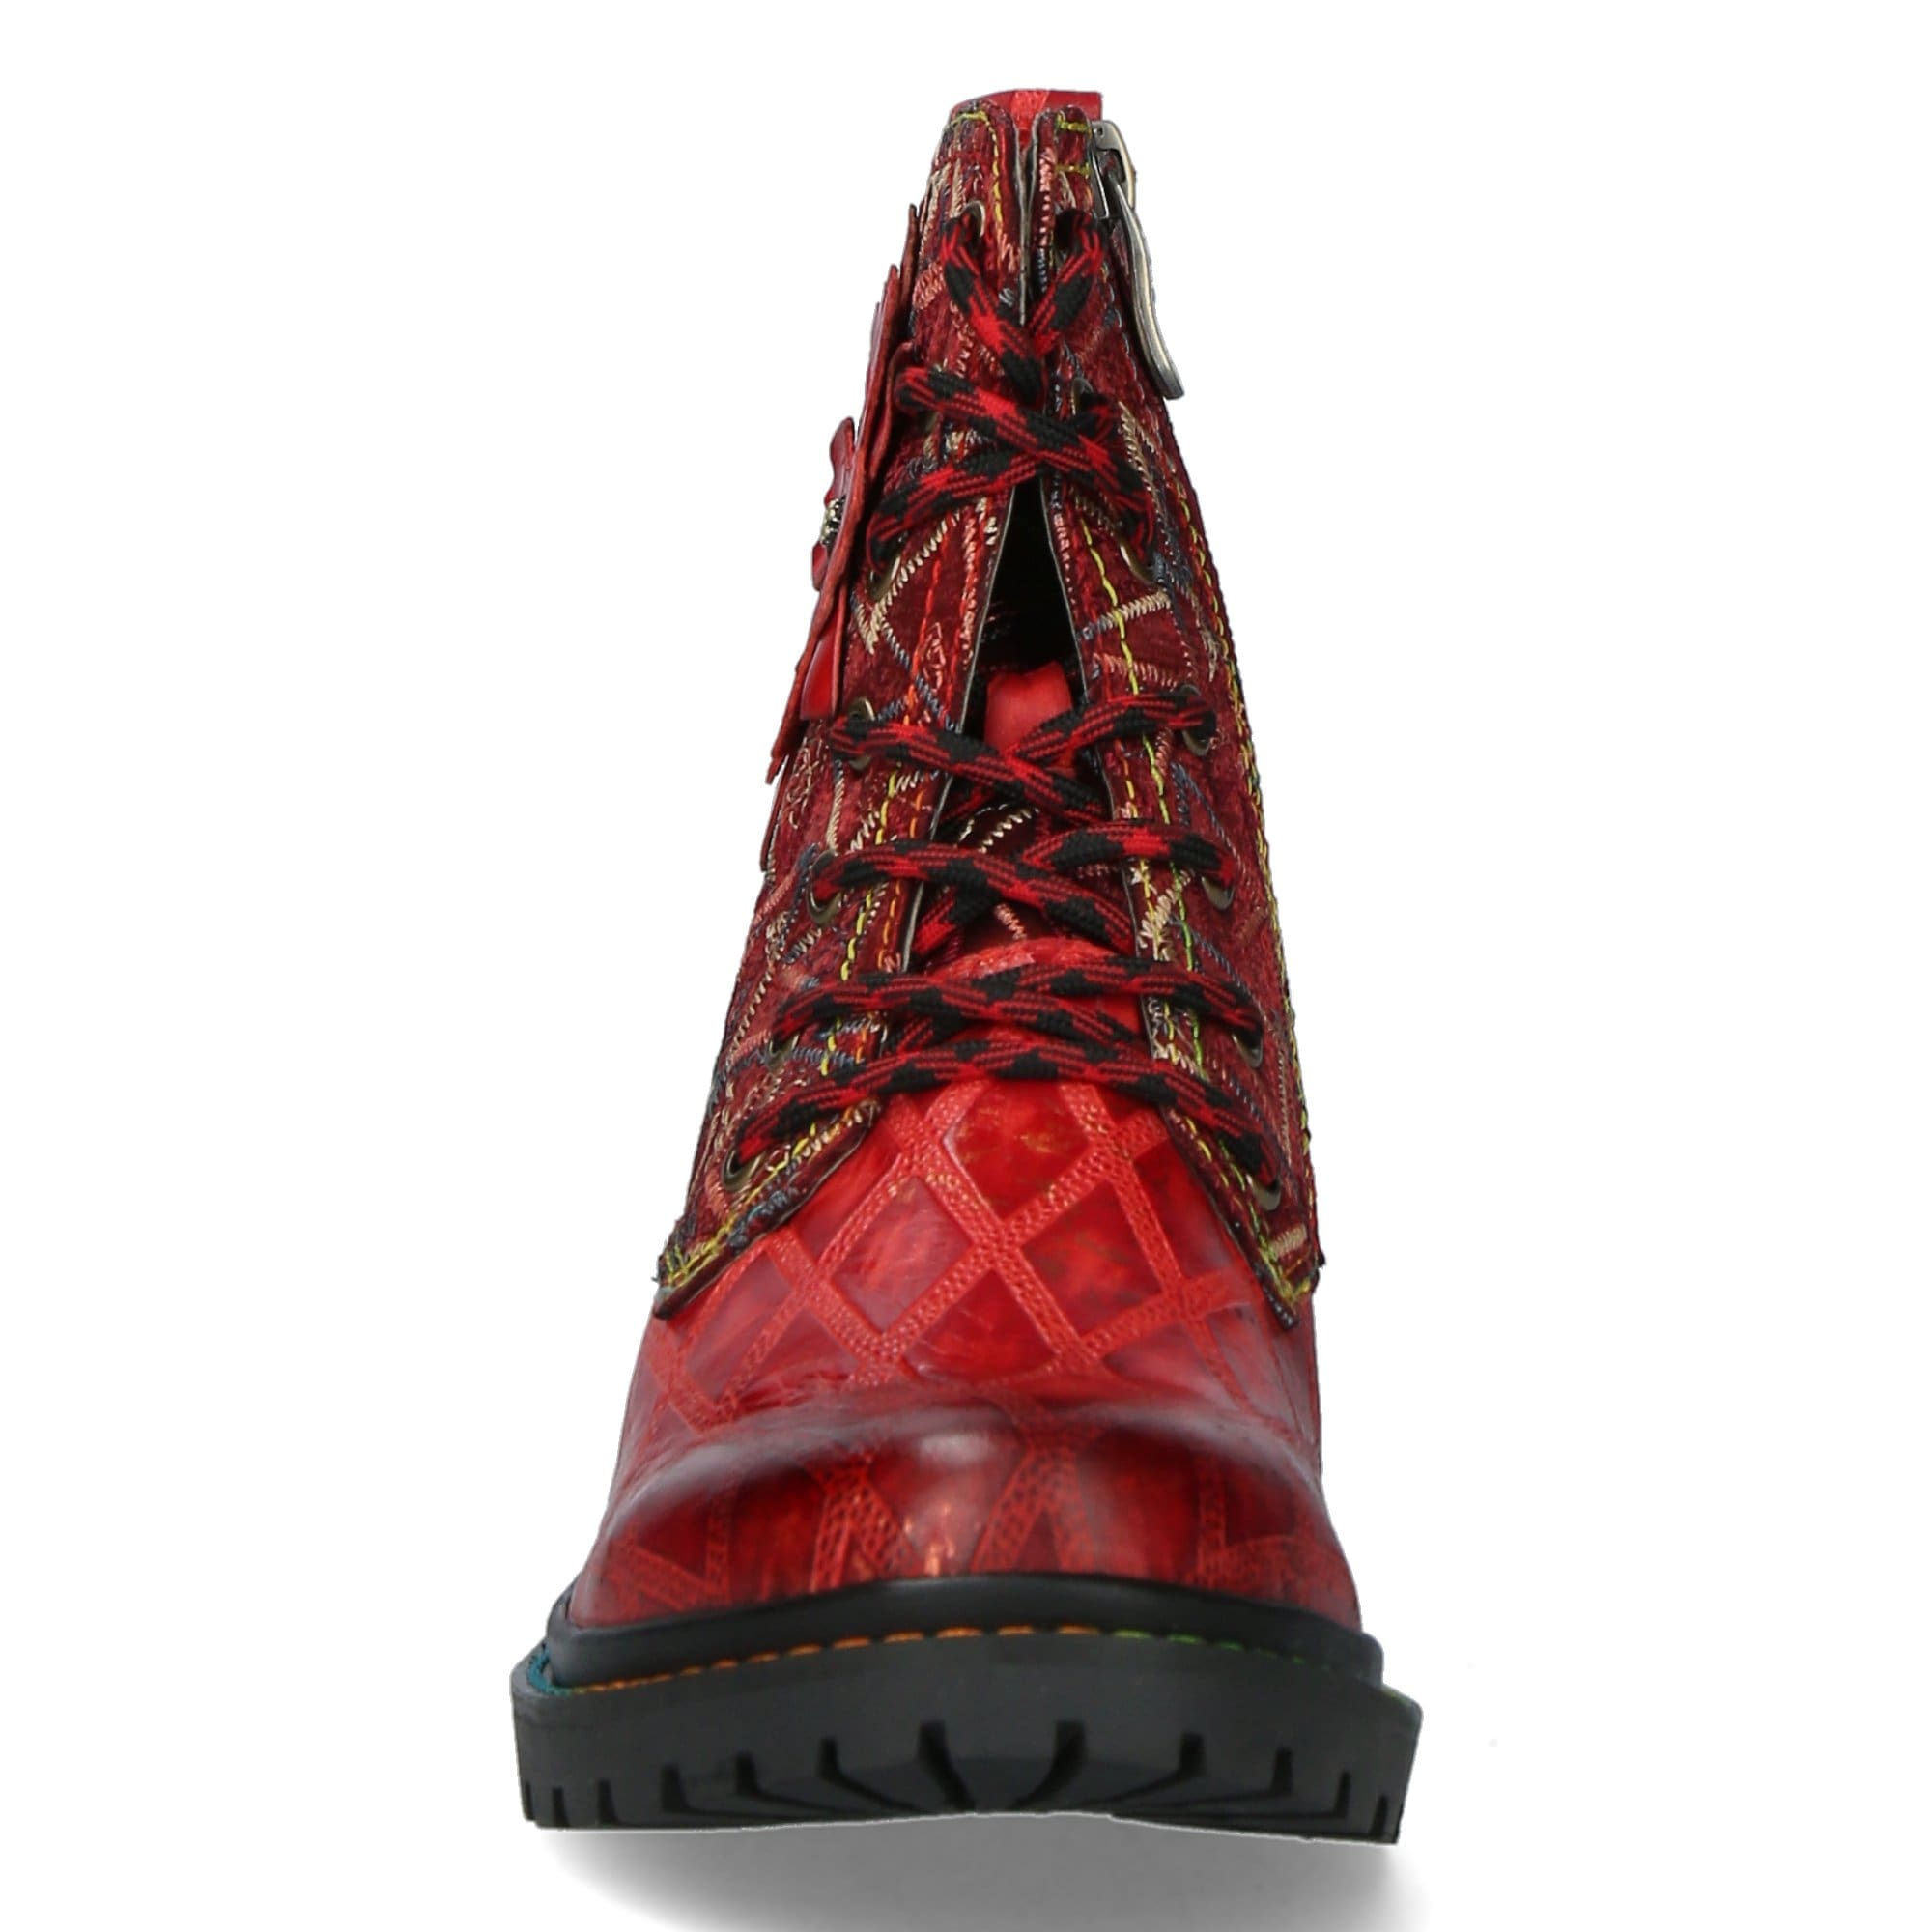 Chaussure IFCIGO 03 - Boots